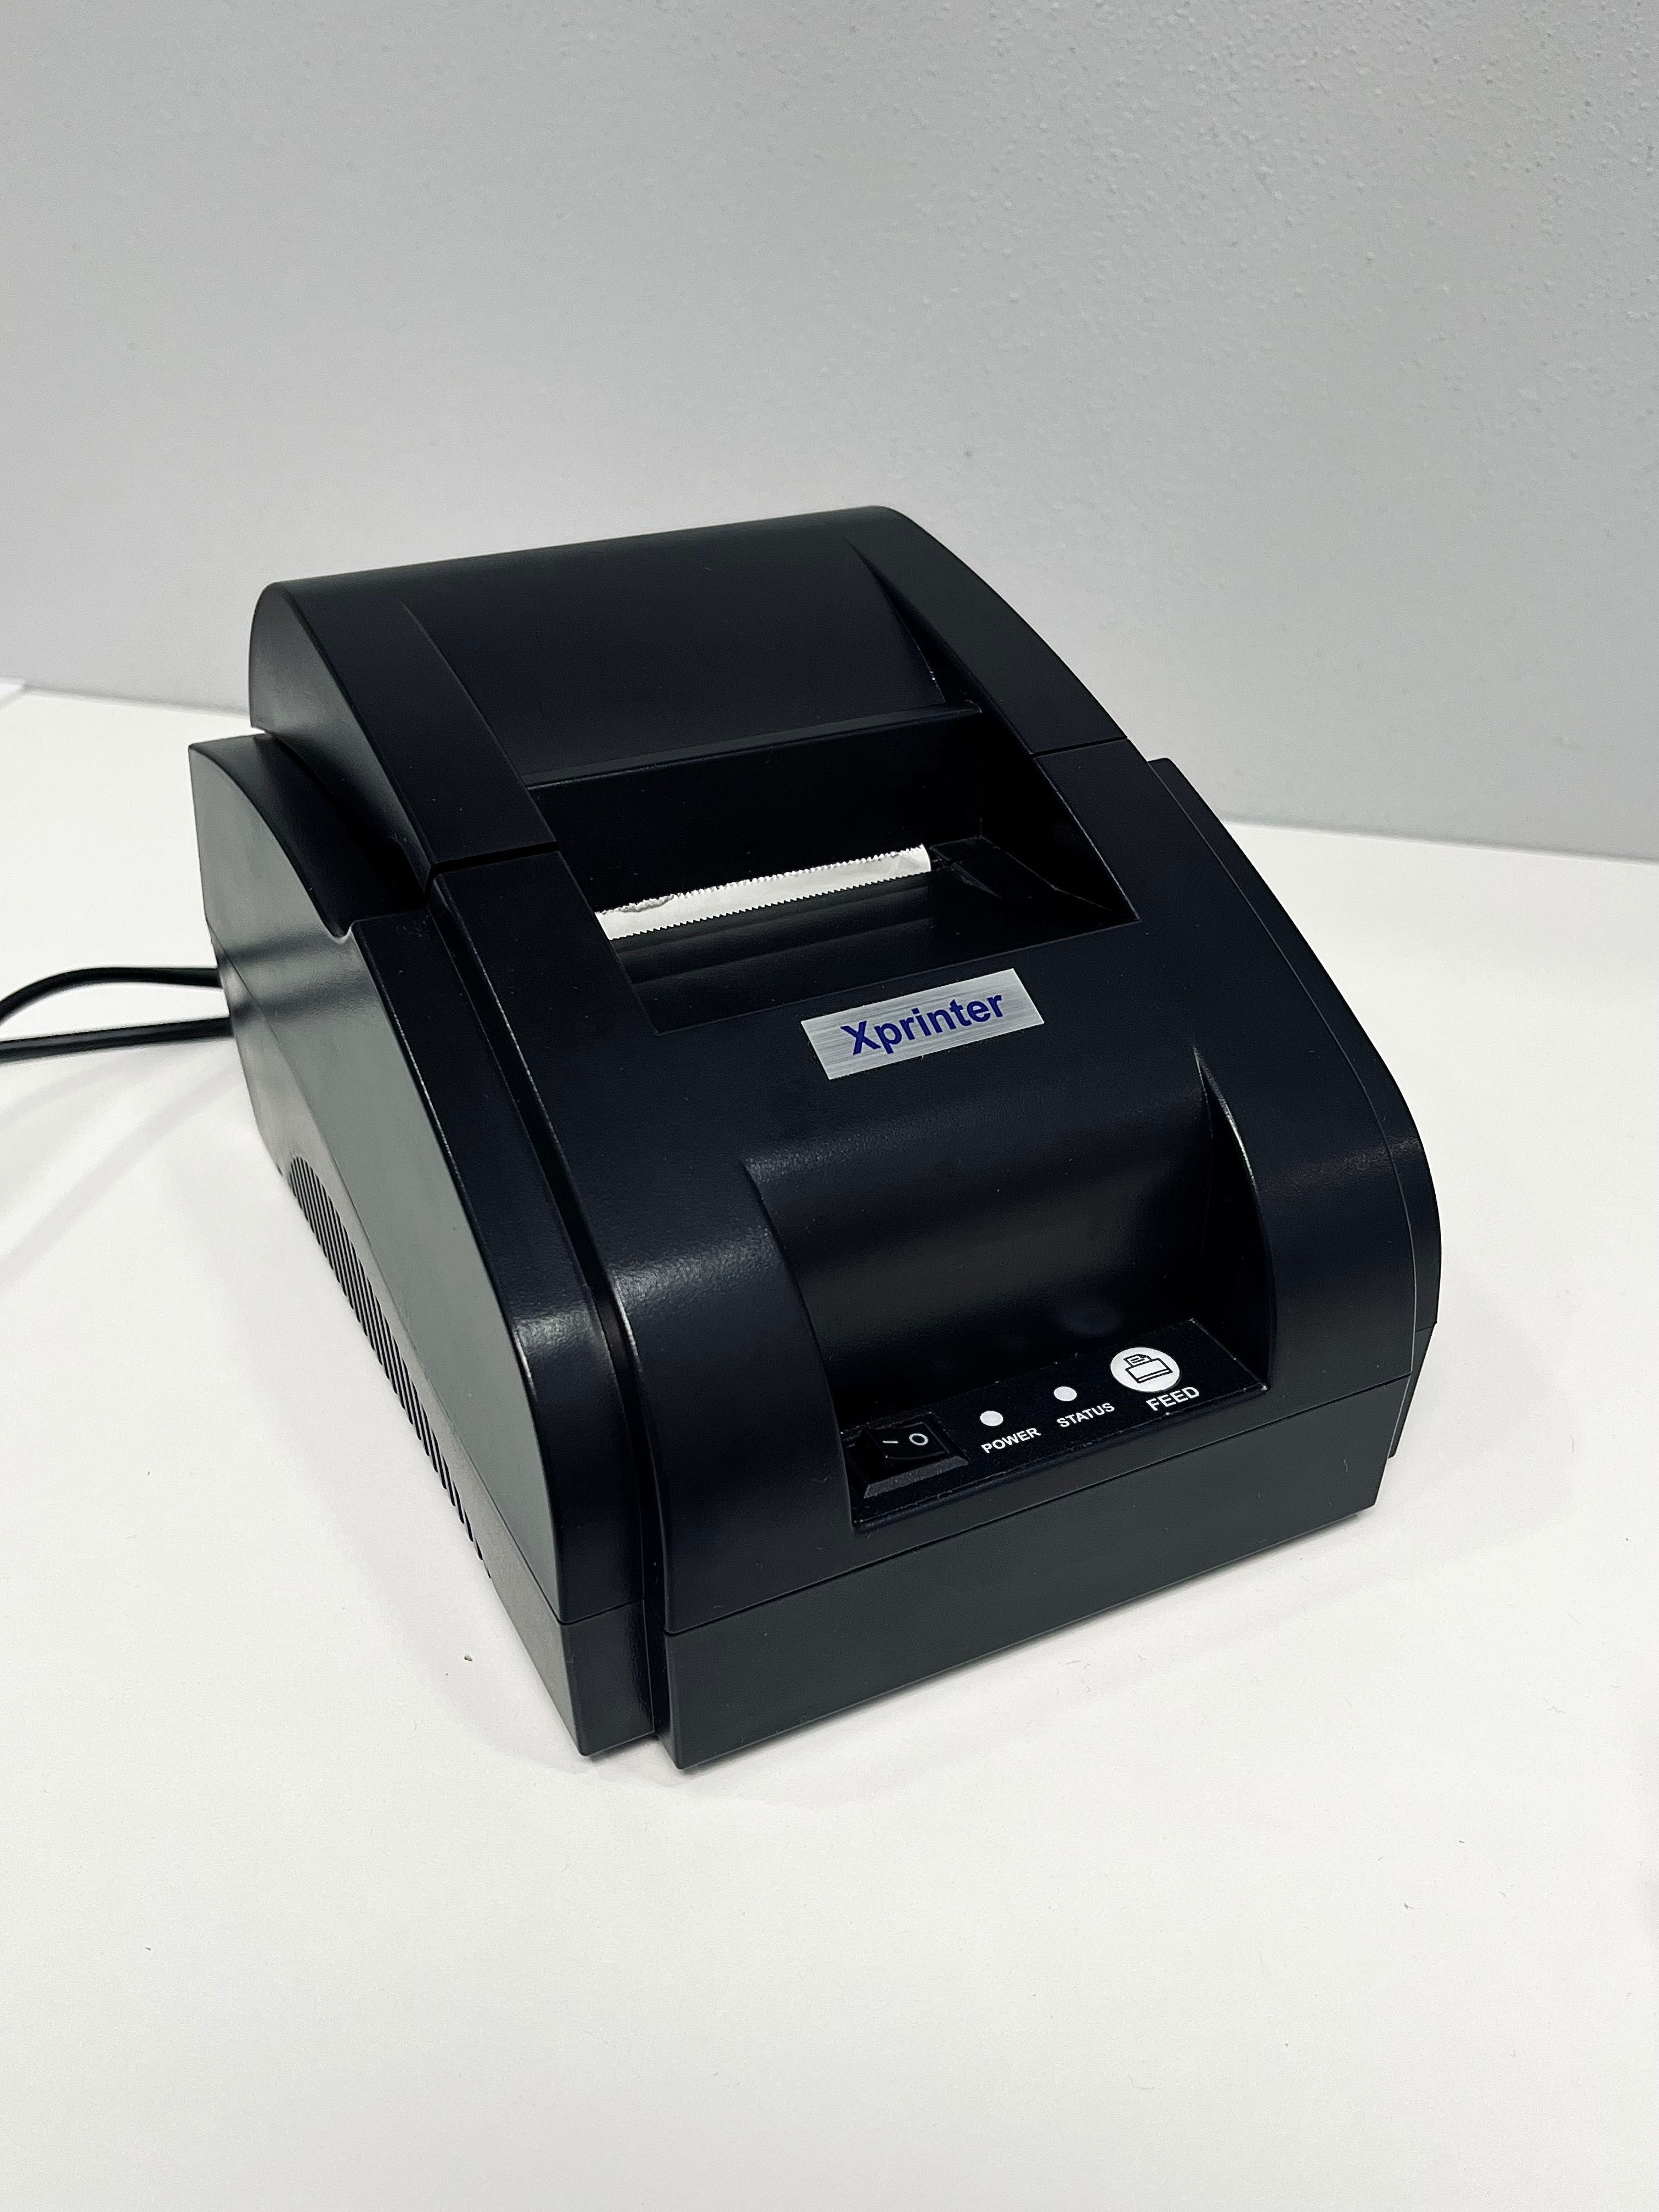 Принтер для чеків POS-принтер Xprinter XP-58IIH, чорний (XP58IIH)